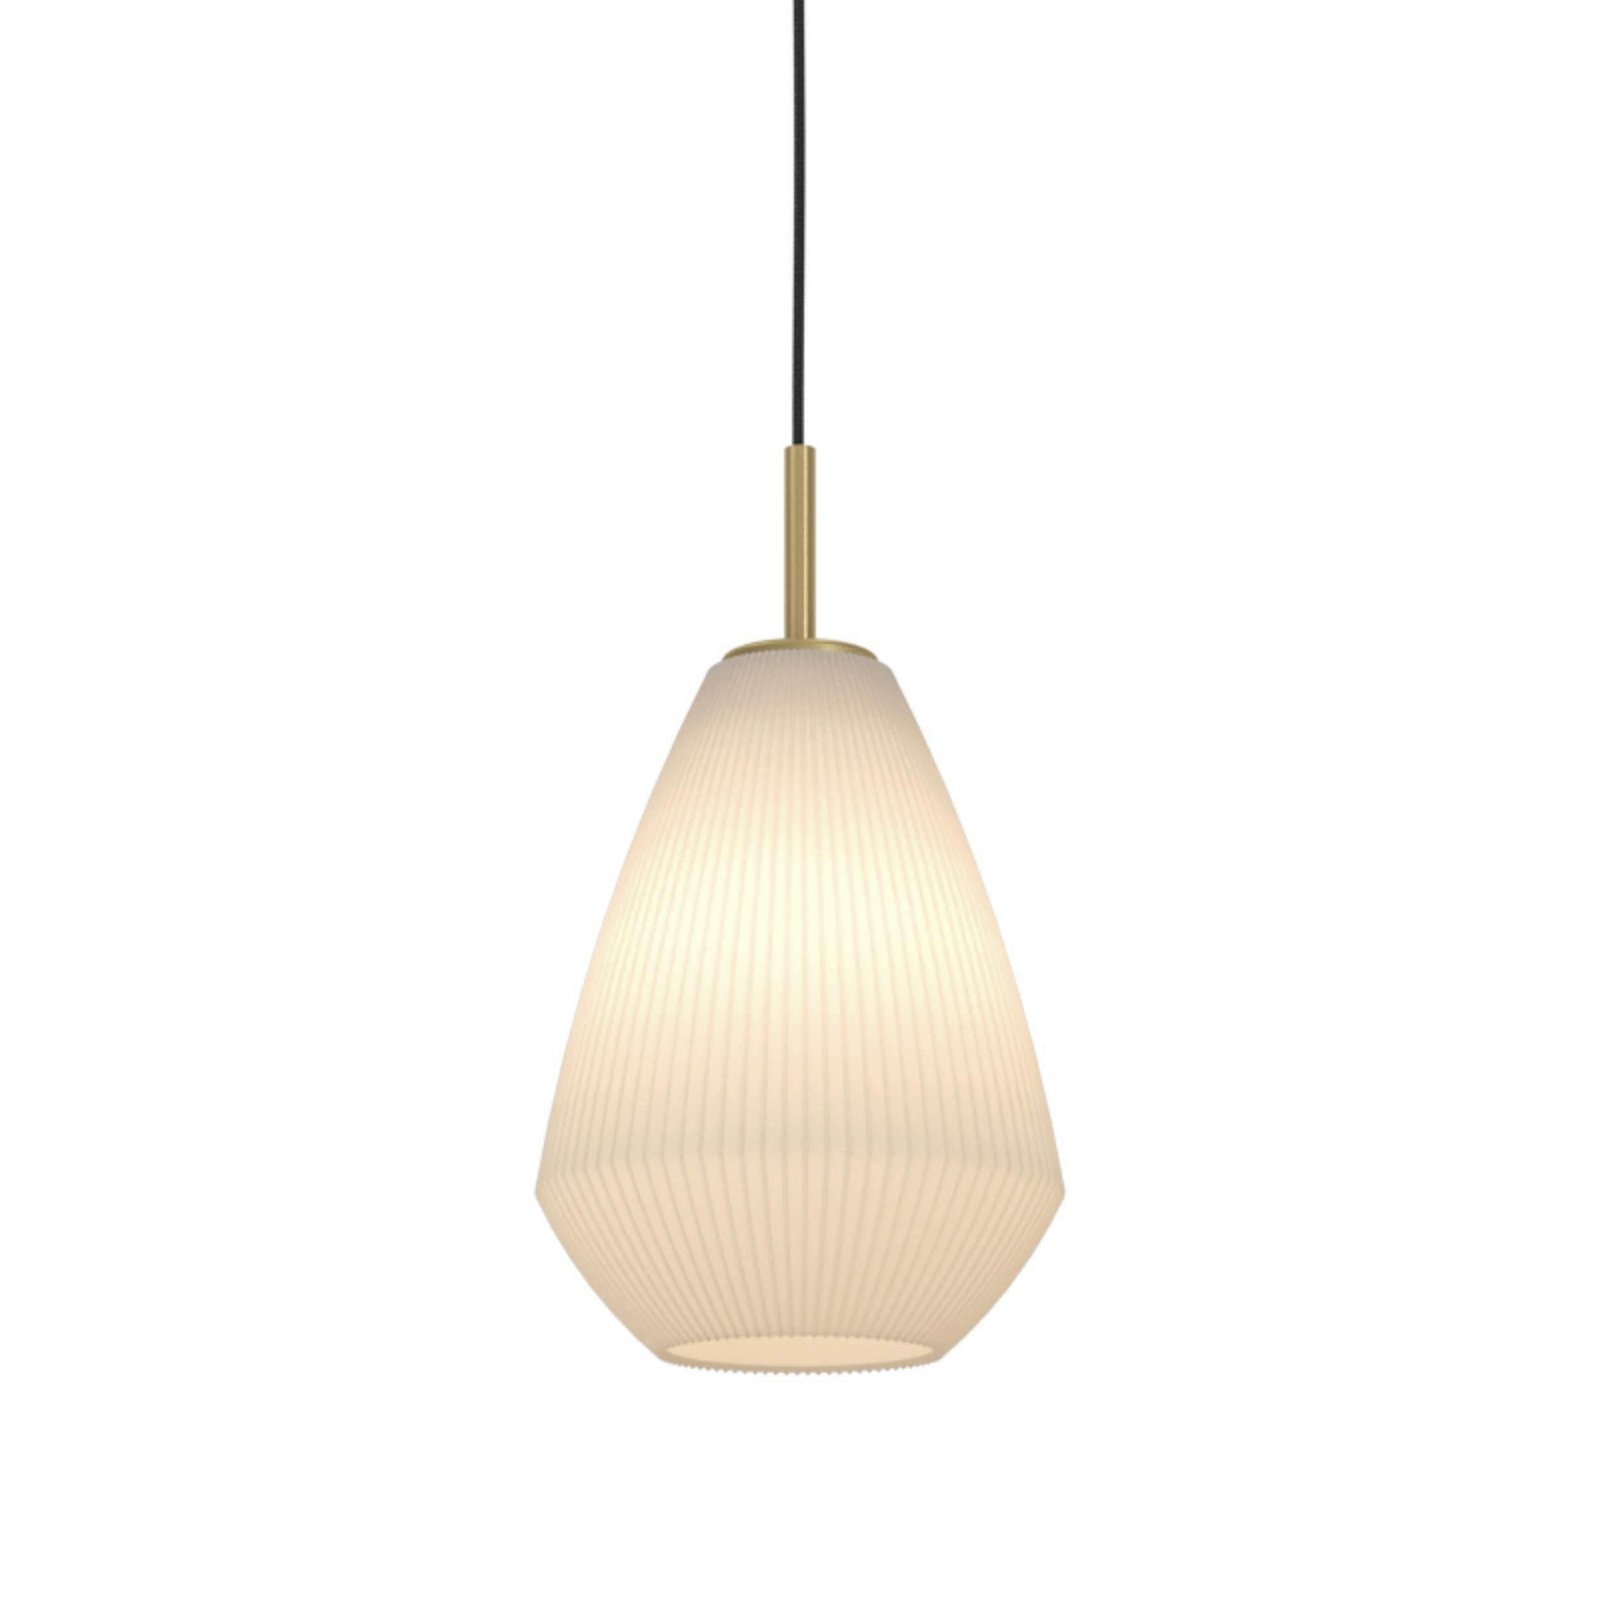 Caprarola hanging light, Ø 20 cm, sand-coloured, glass/metal